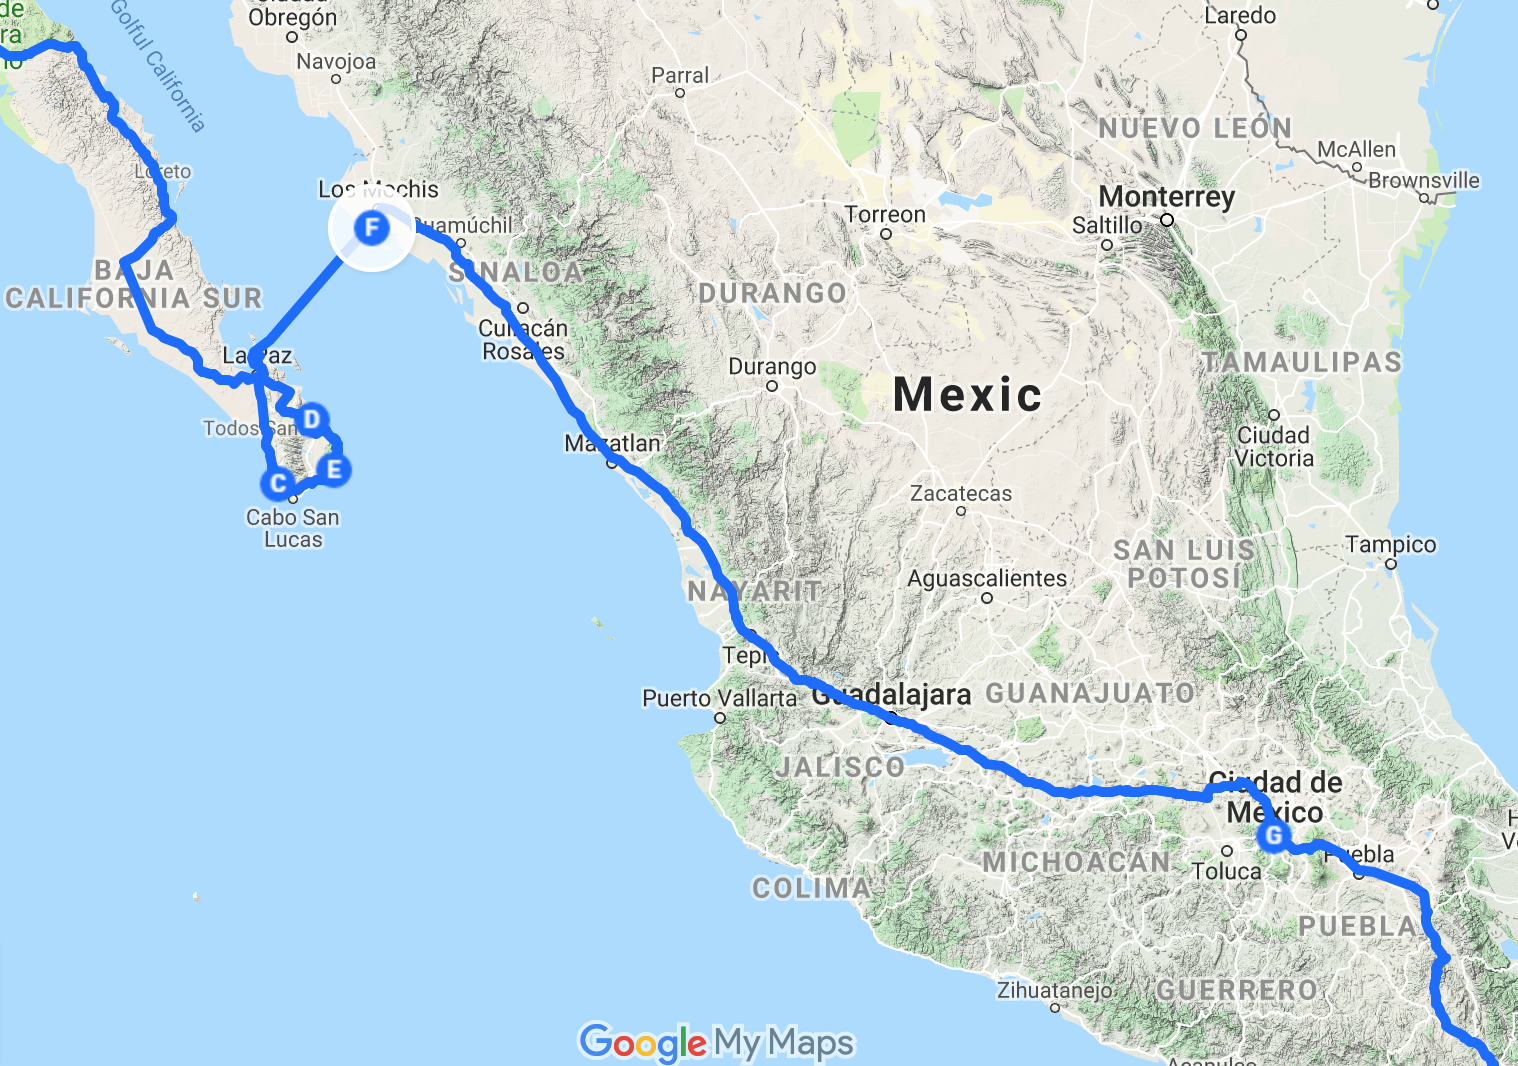 The route: Topolobampo to Mexico City